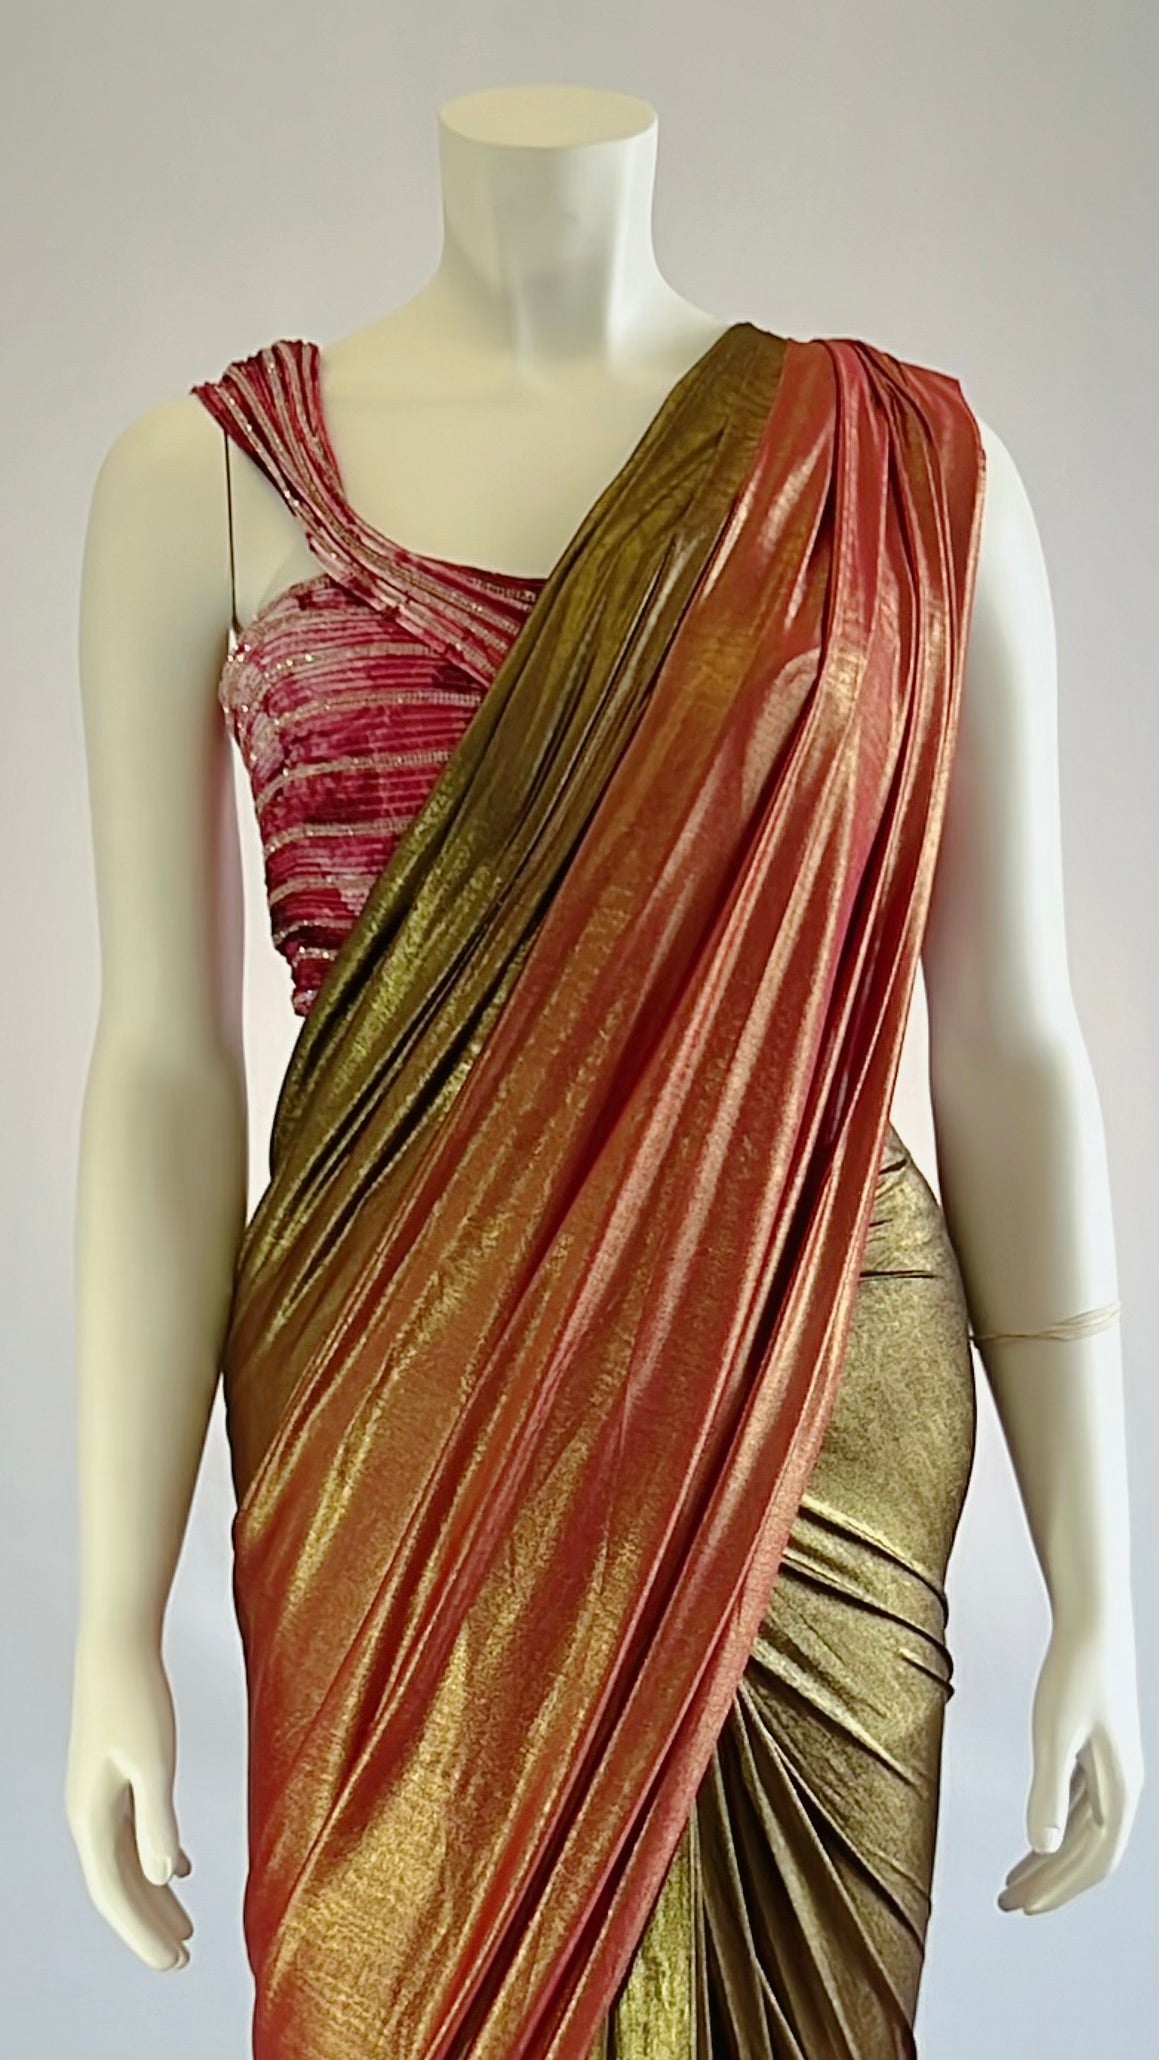 Kalyan Silks - Exclusive and Stunning Kanchipuram Silk Sarees